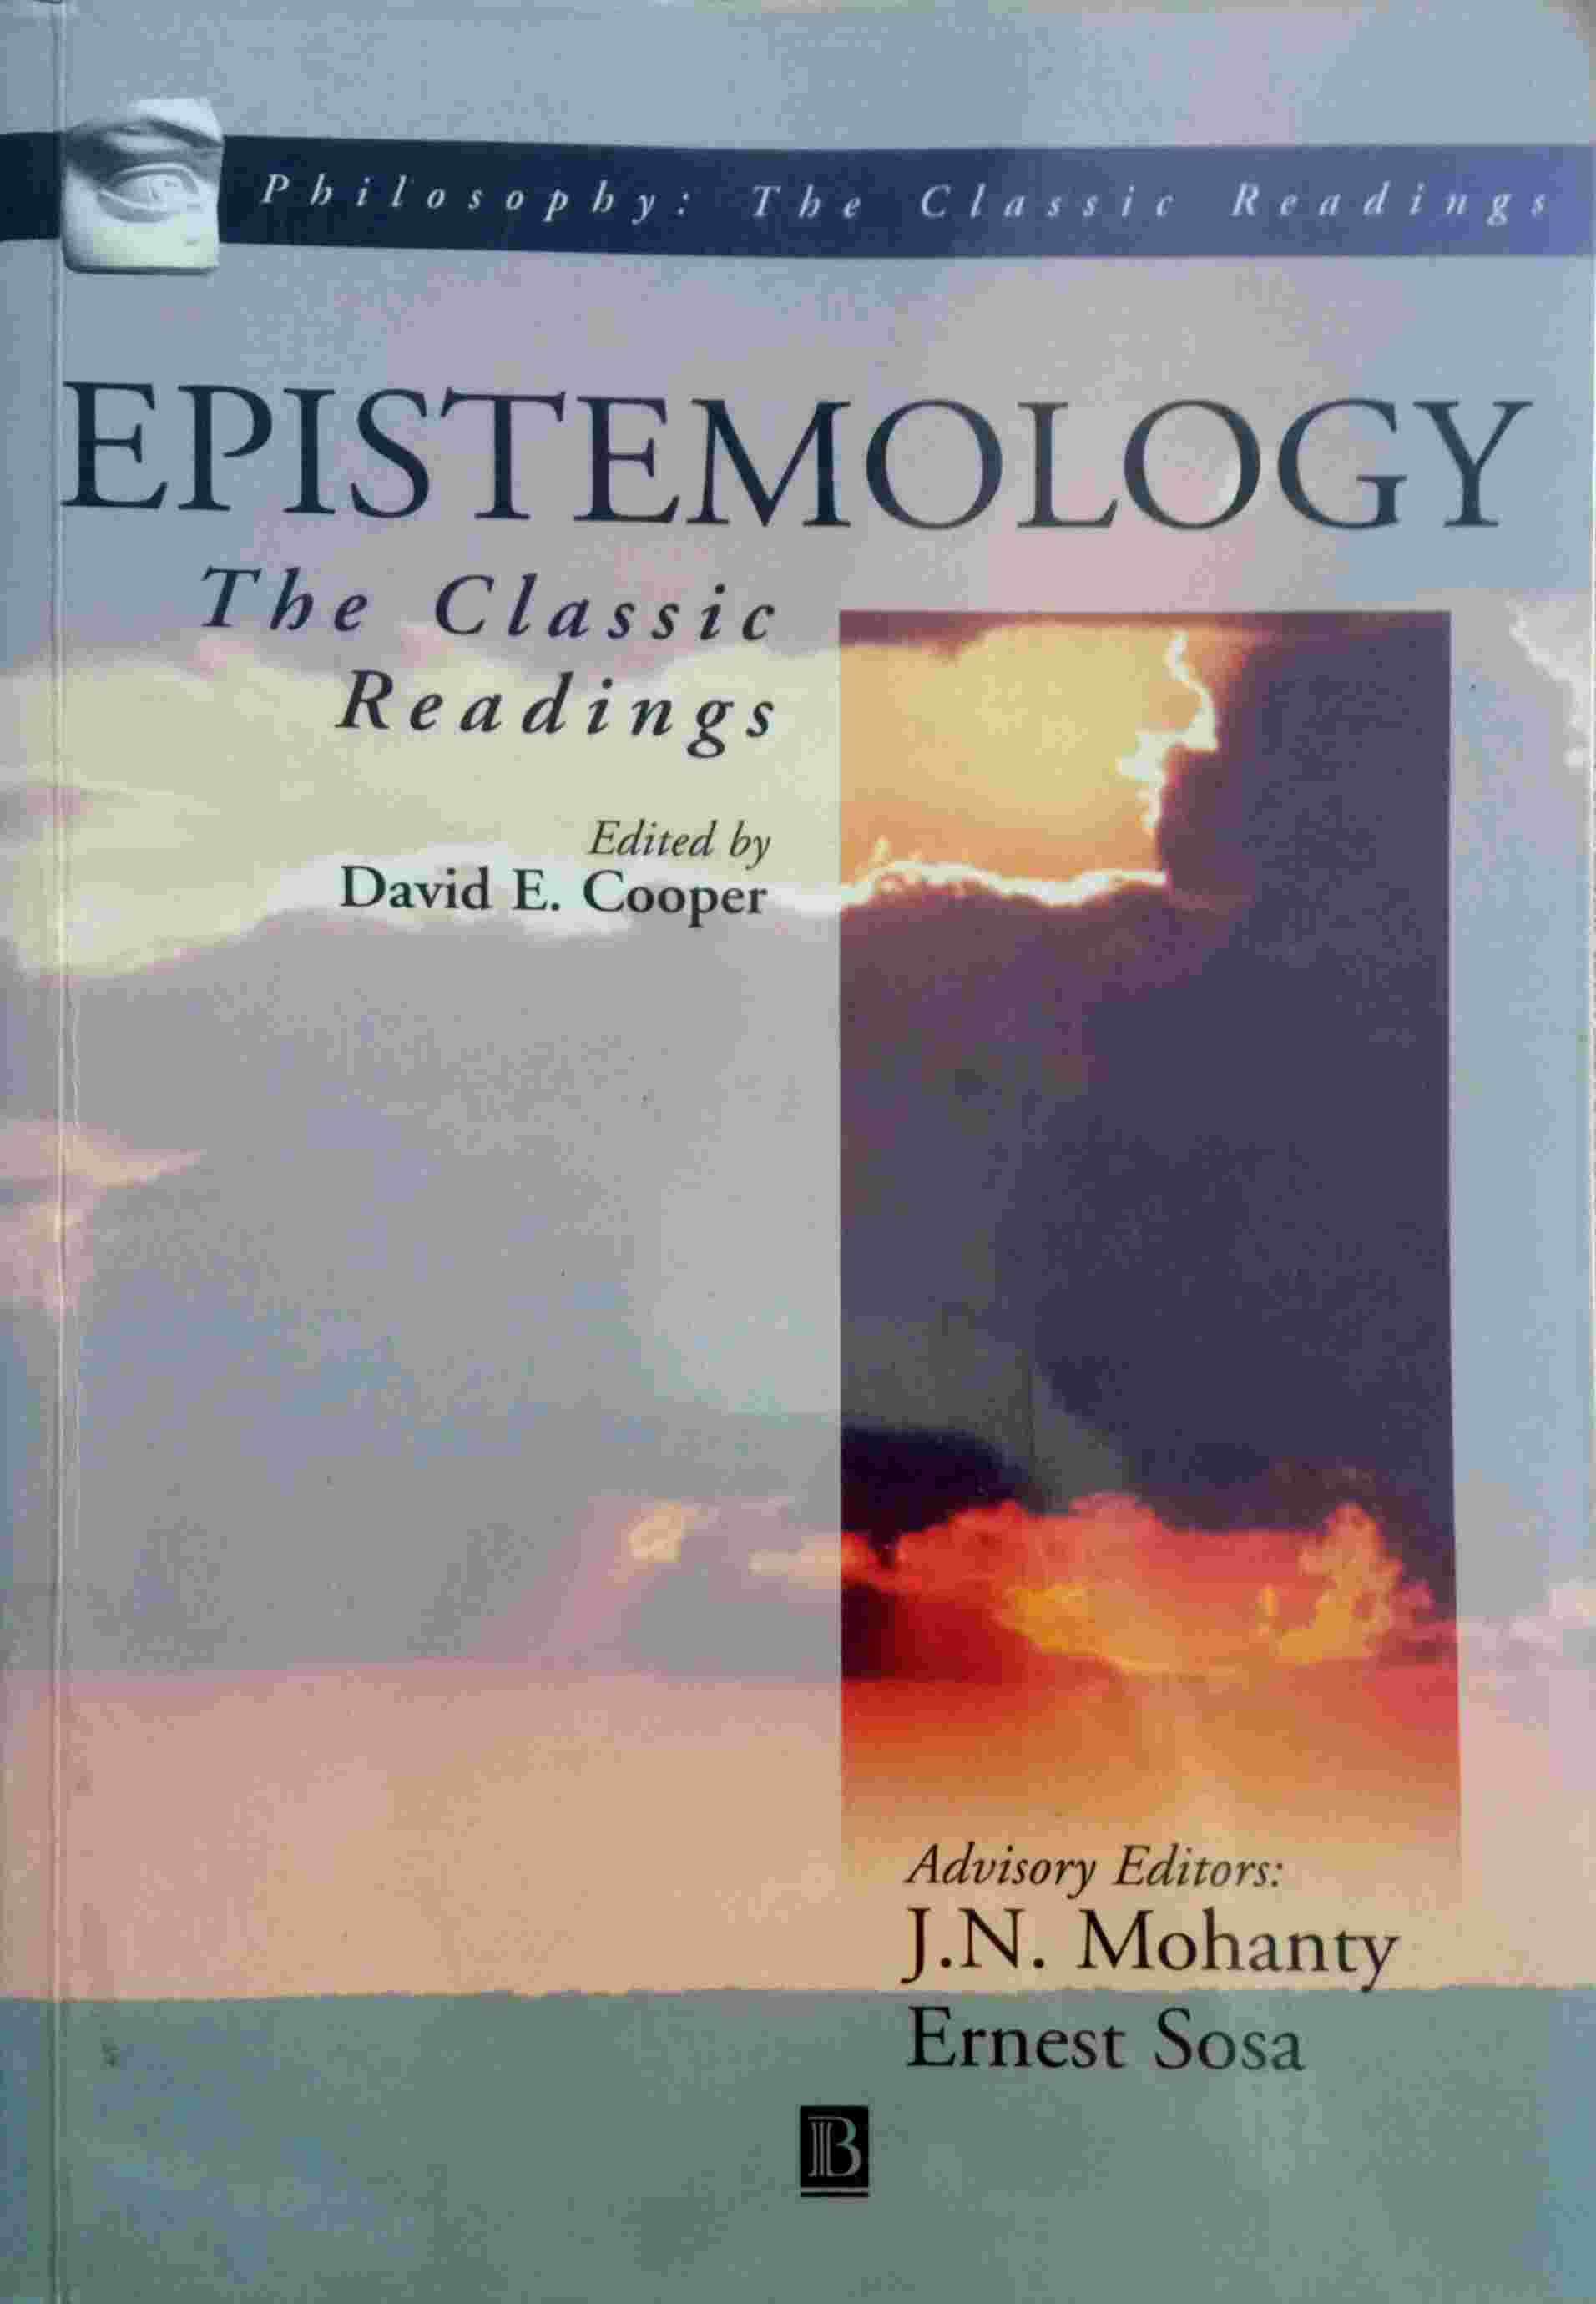 EPISTEMOLOGY: THE CLASSIC READINGS